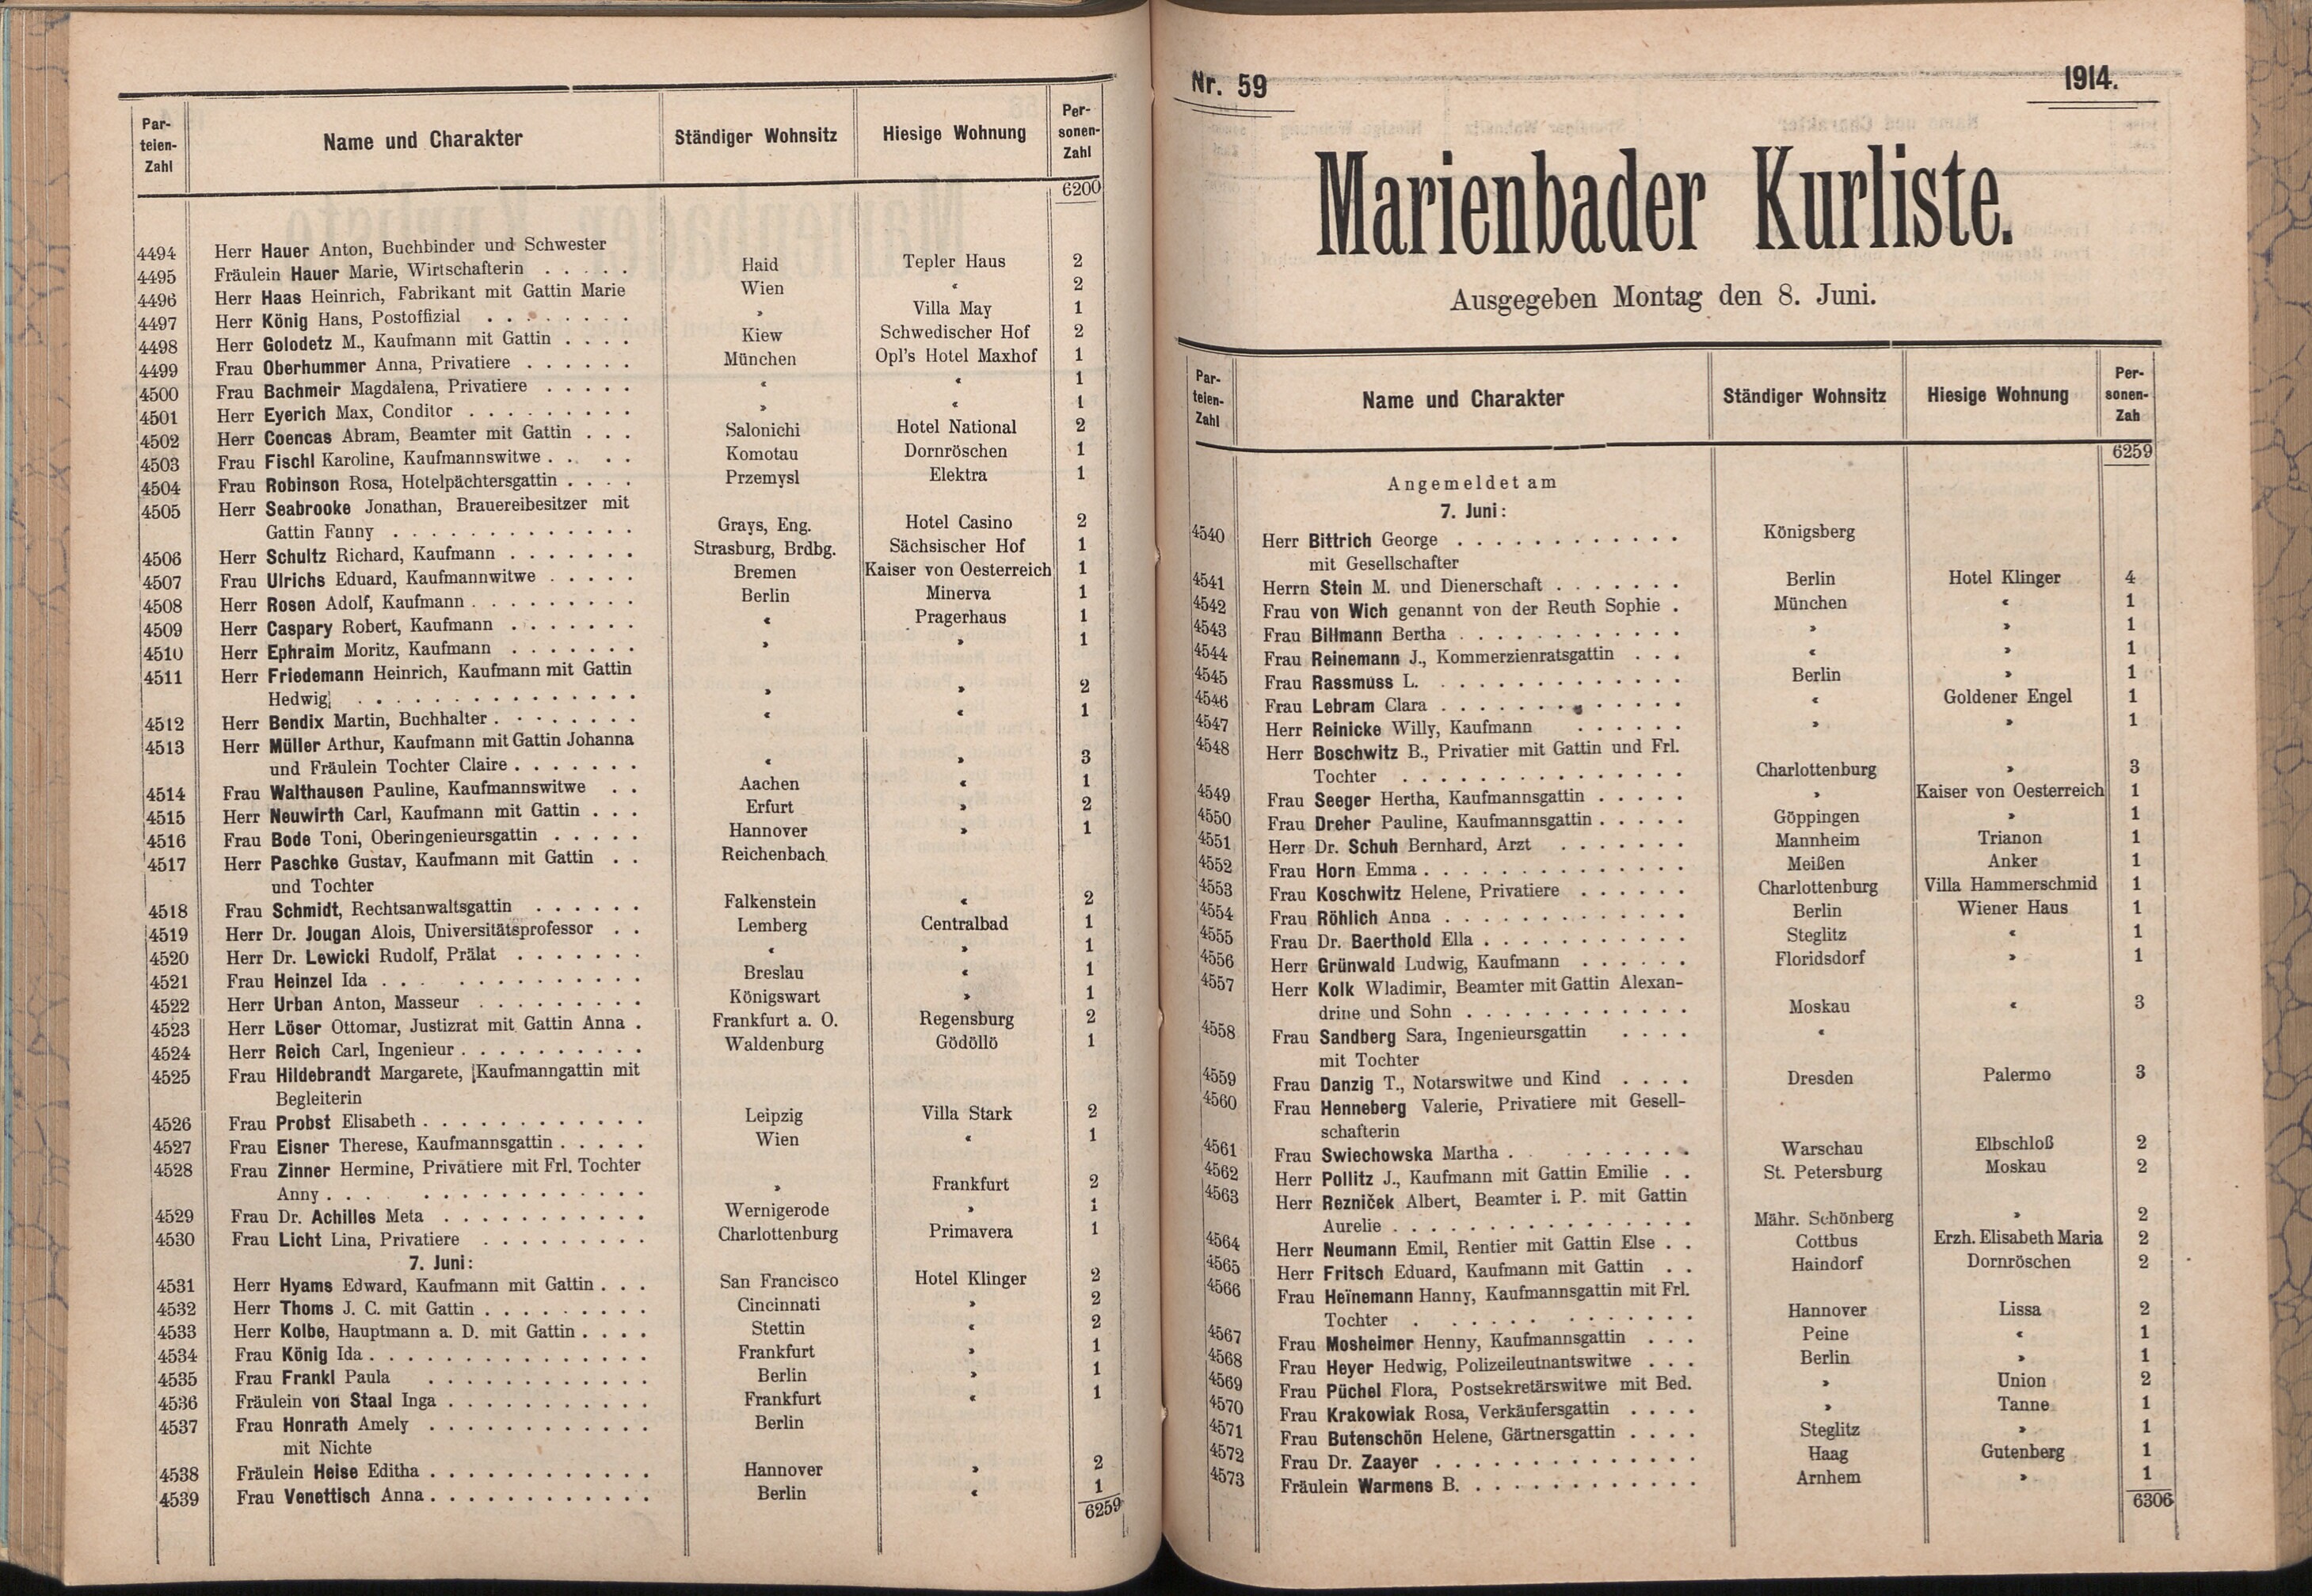 135. soap-ch_knihovna_marienbader-kurliste-1914_1350